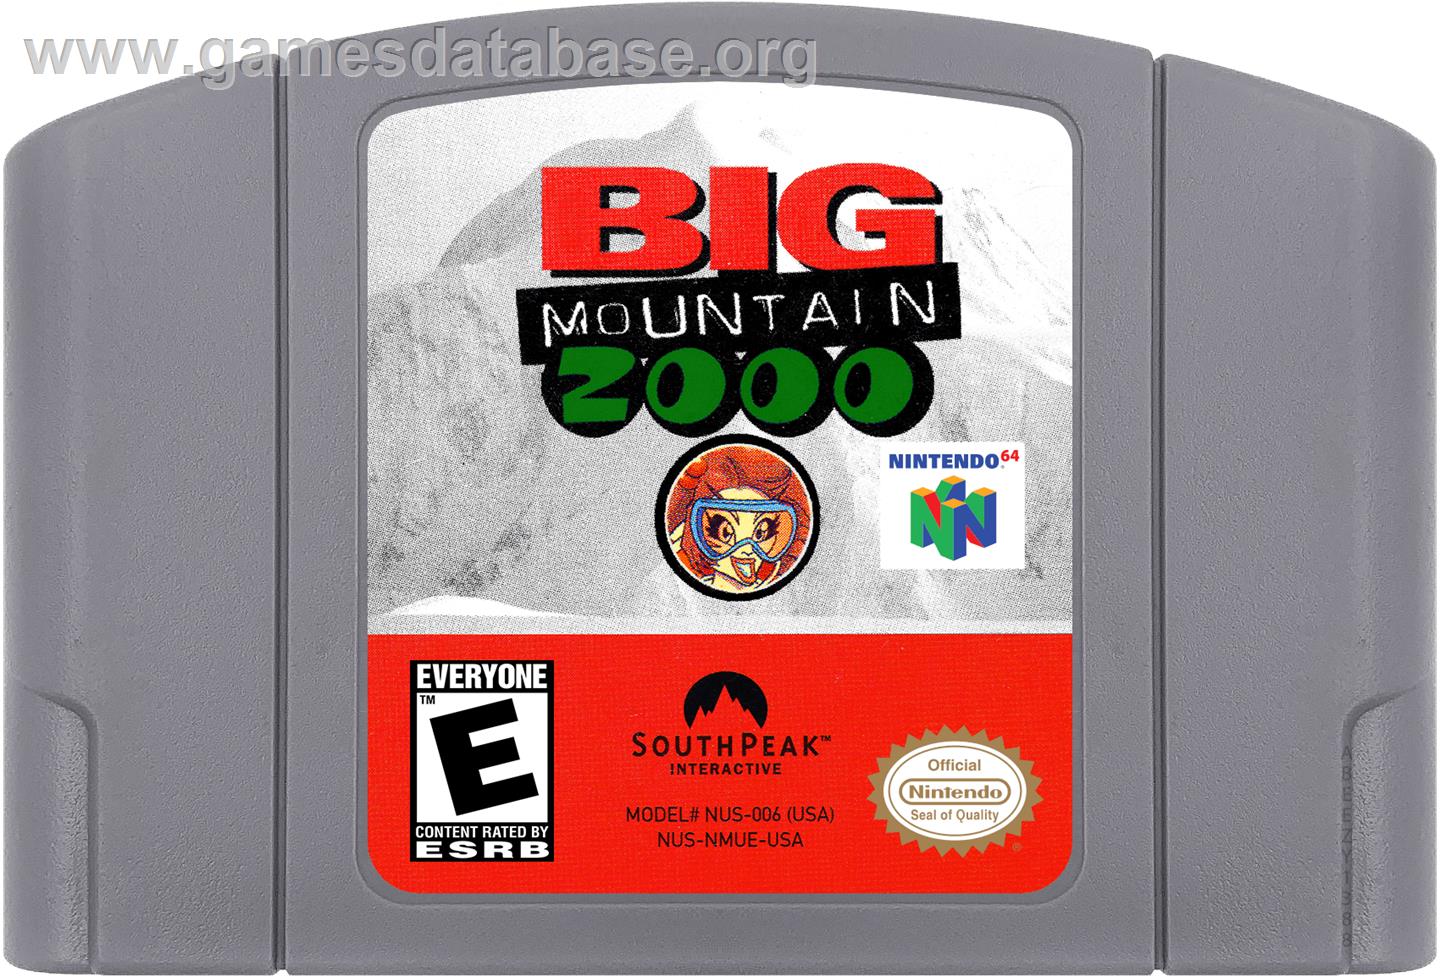 Big Mountain 2000 - Nintendo N64 - Artwork - Cartridge